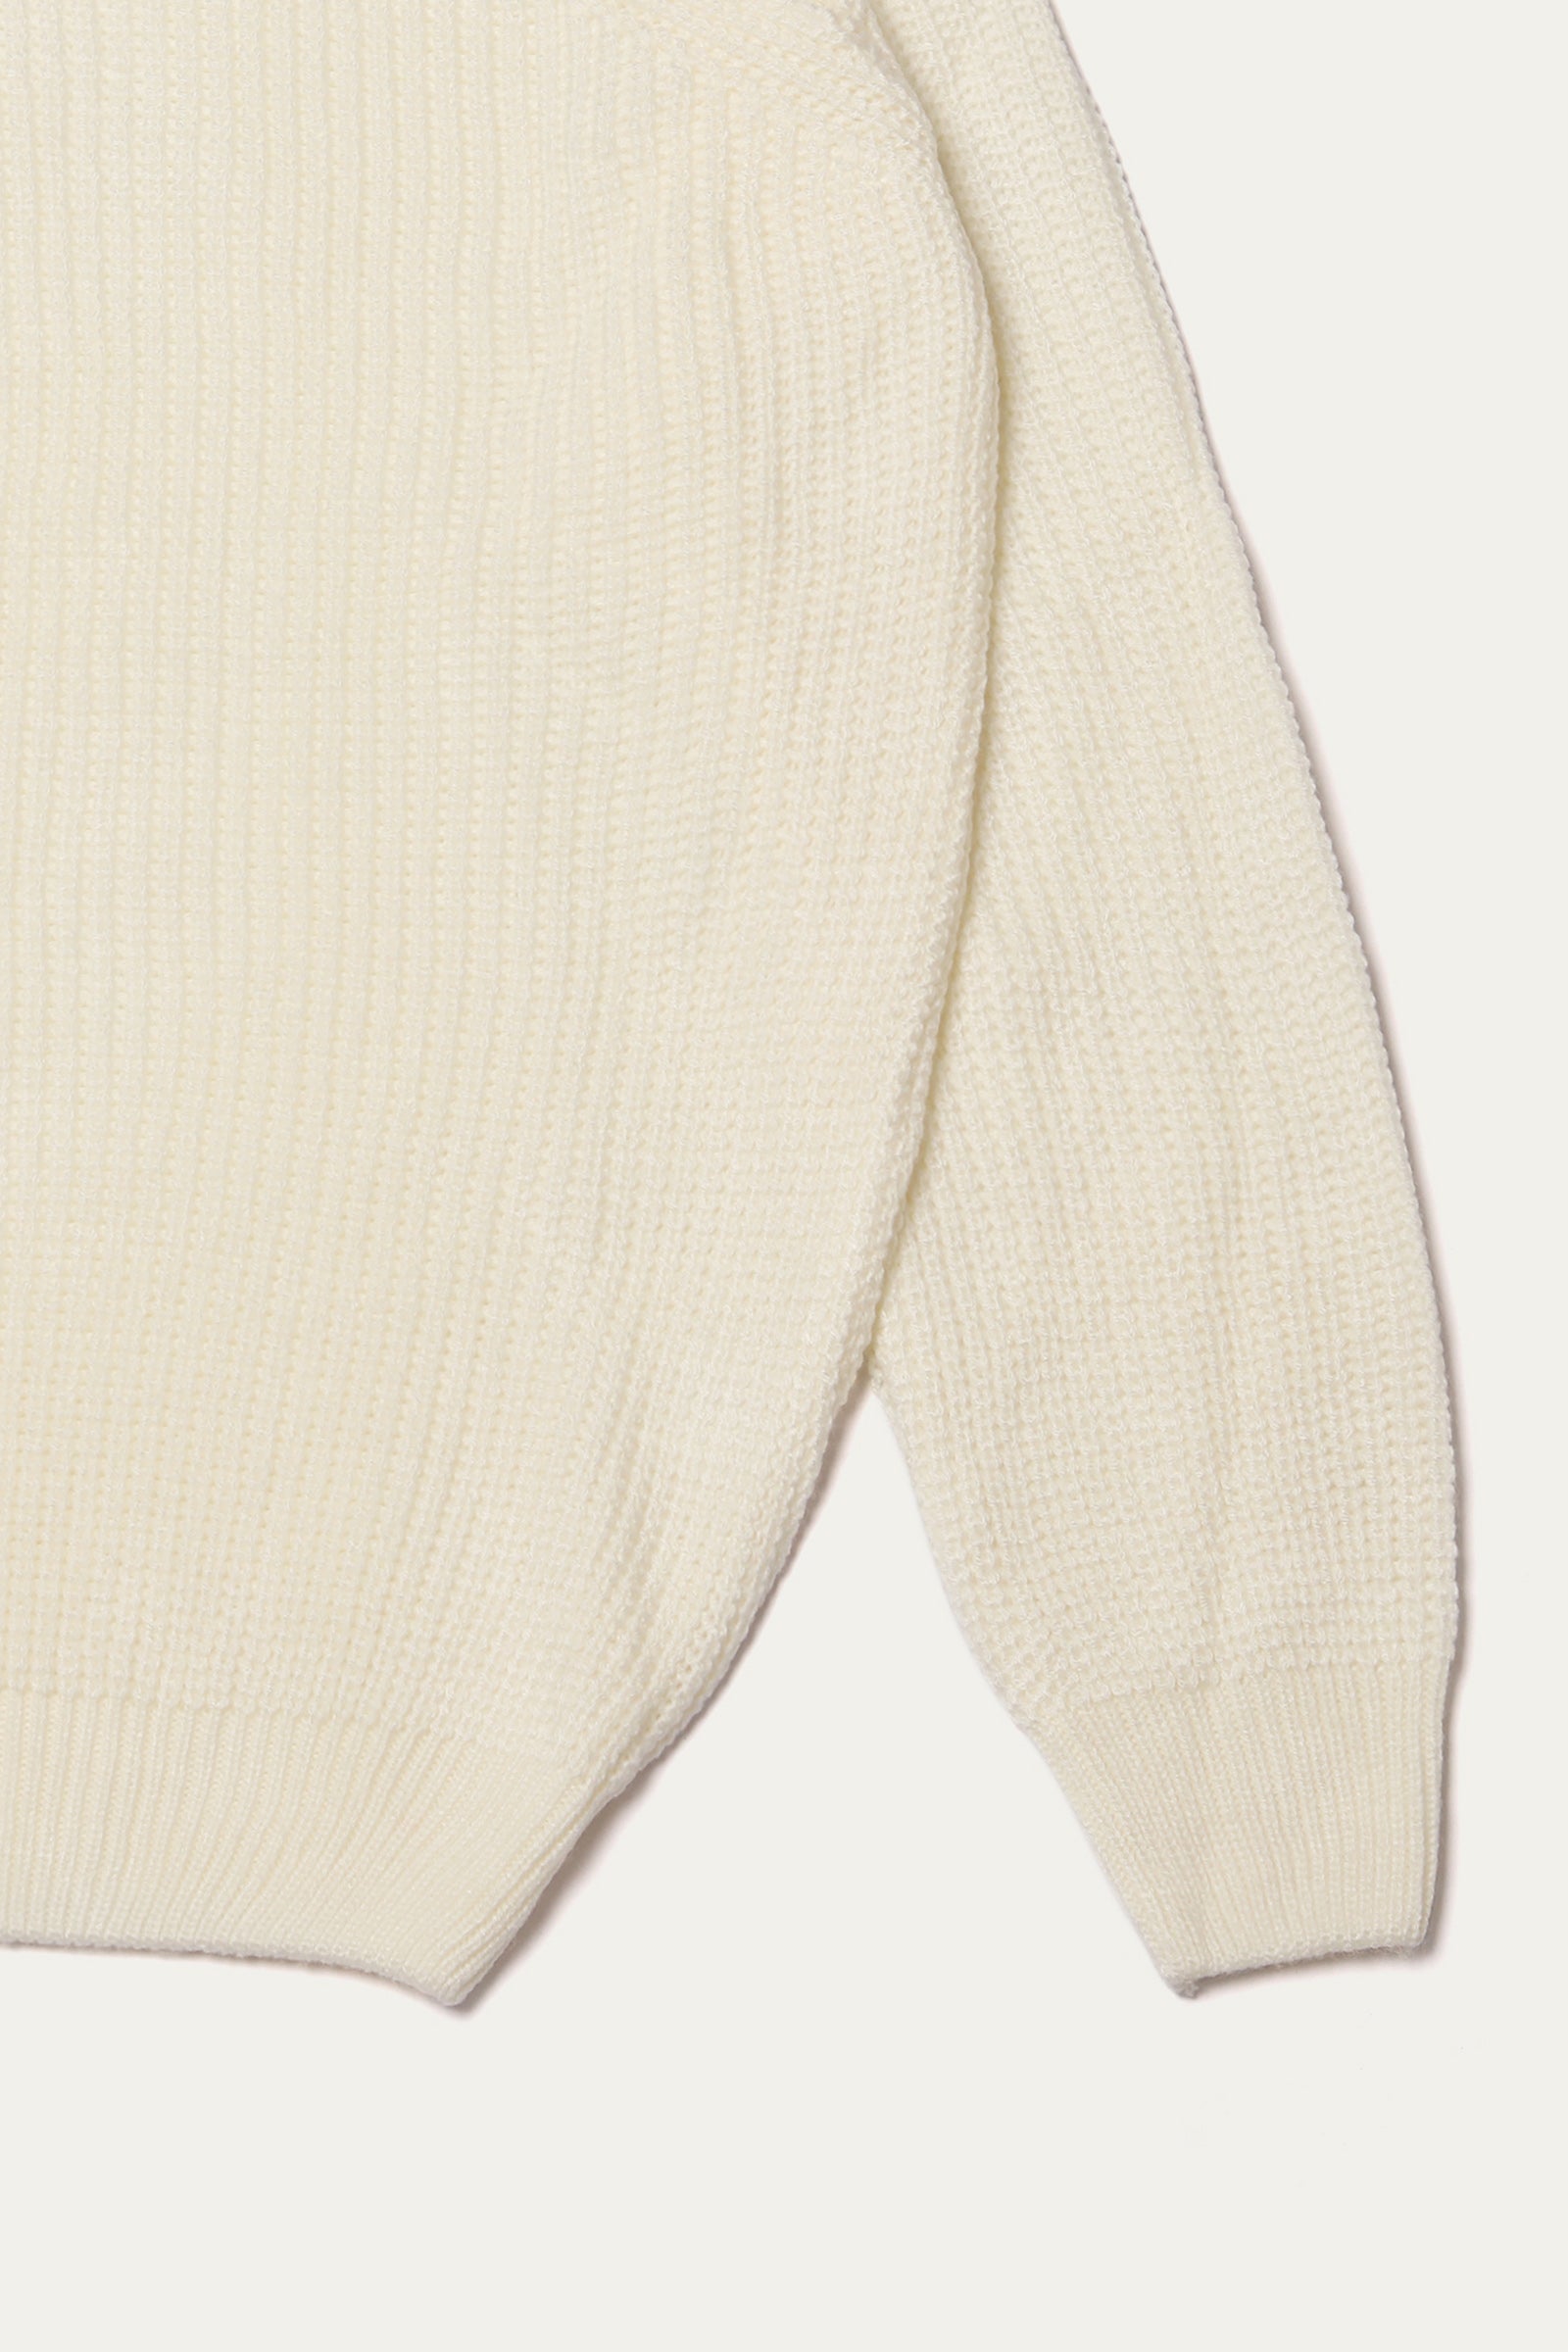 Sweater (SSGSTR-93)